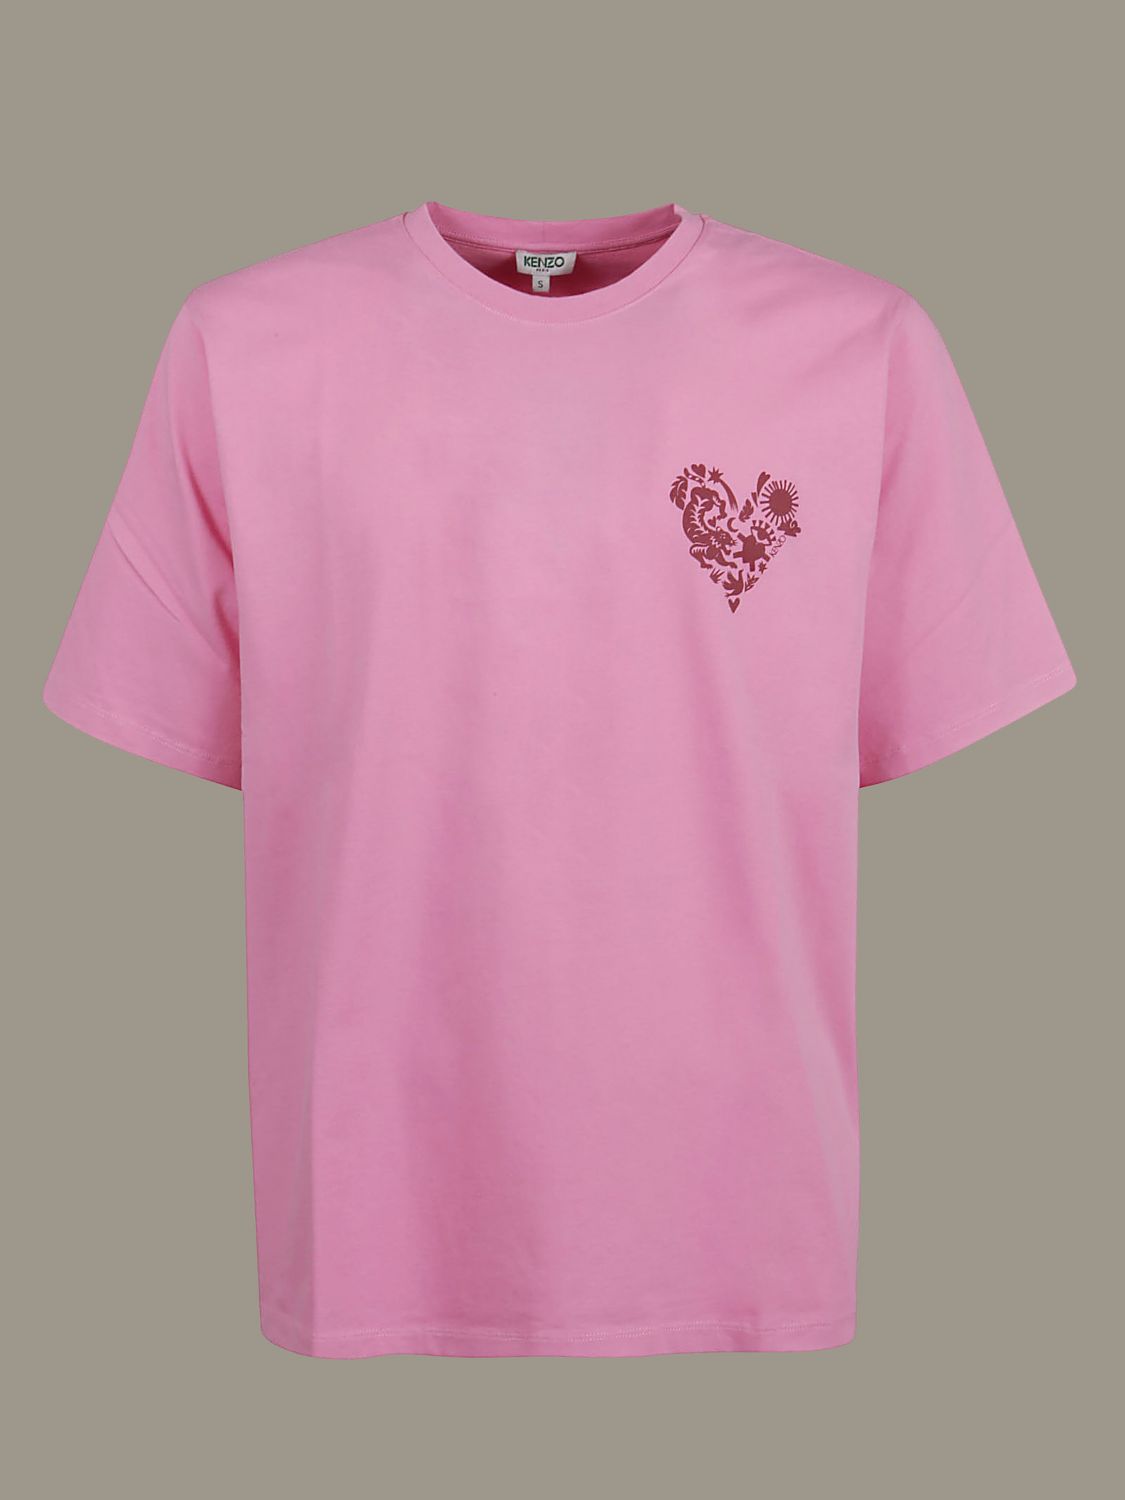 pink kenzo shirt mens